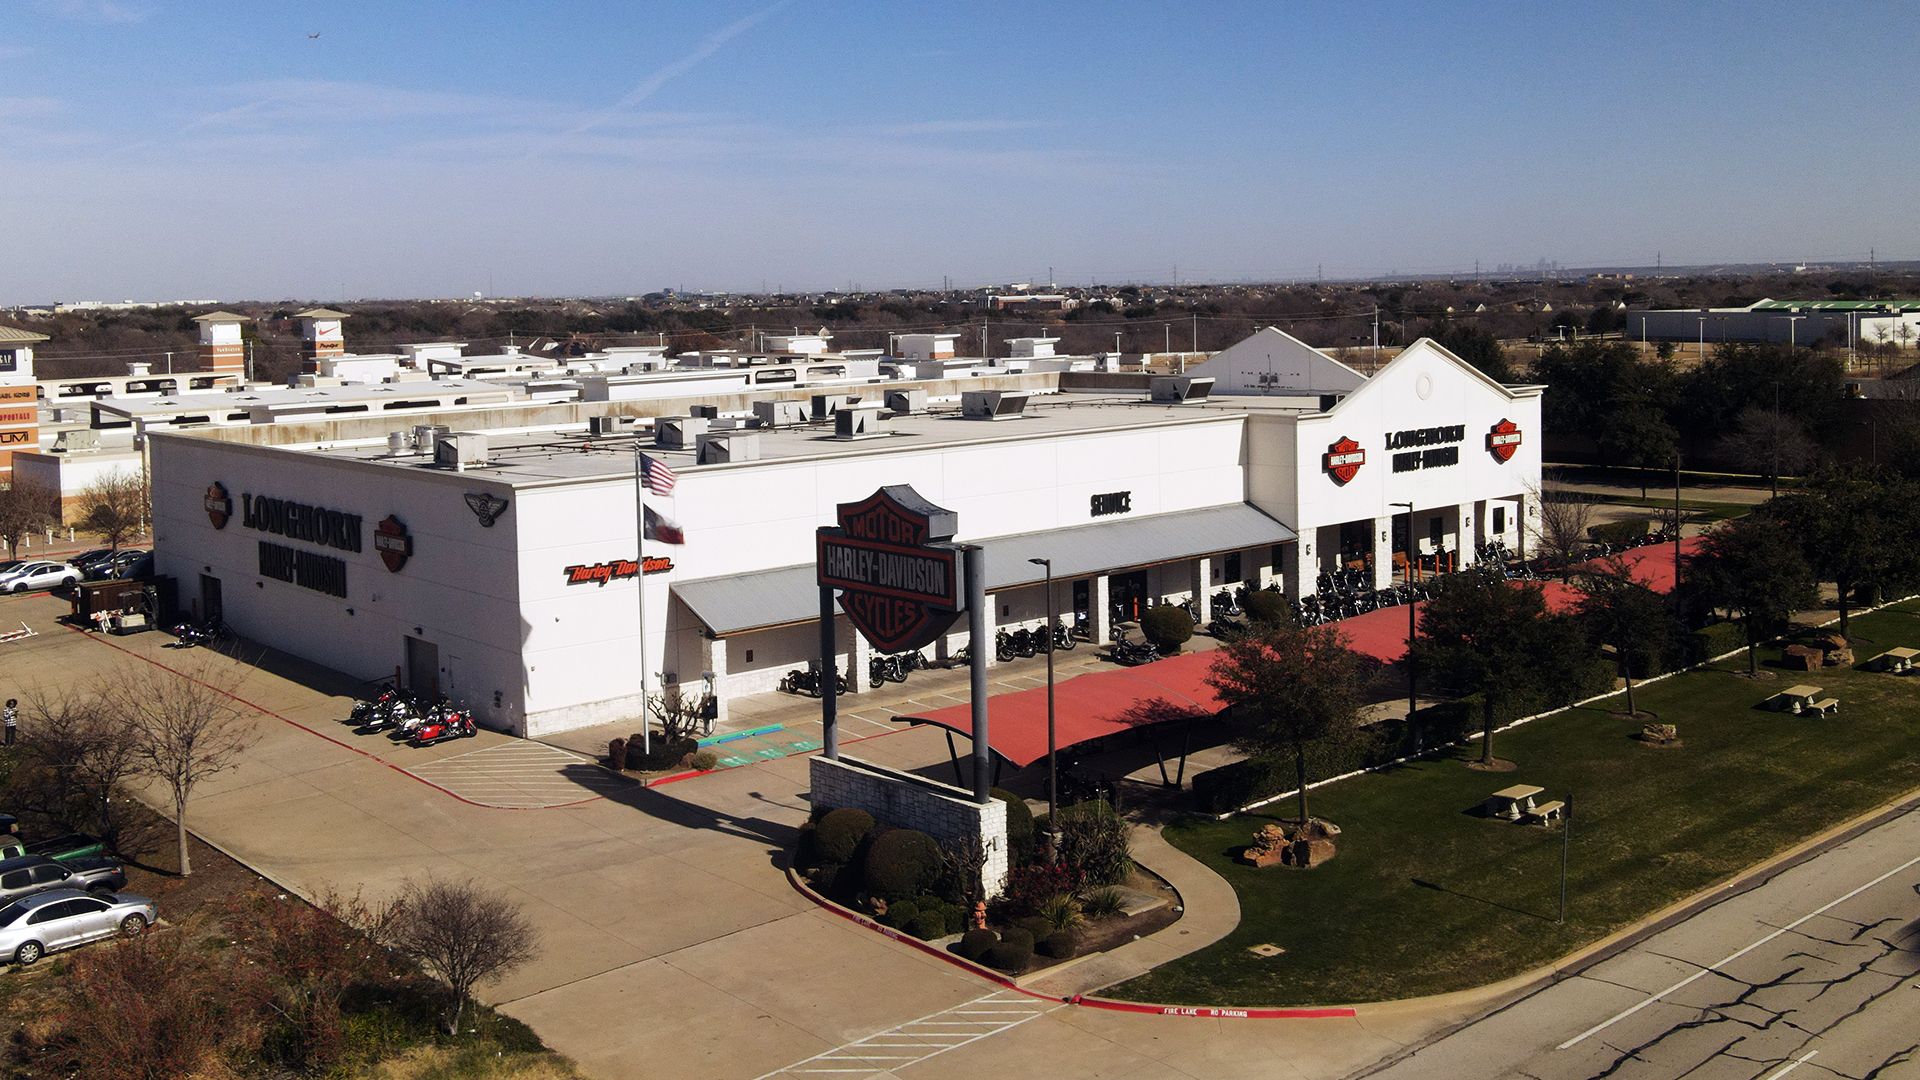 2014 Harley-Davidson Ultra Limited in Grand Prairie, Texas - Photo 5